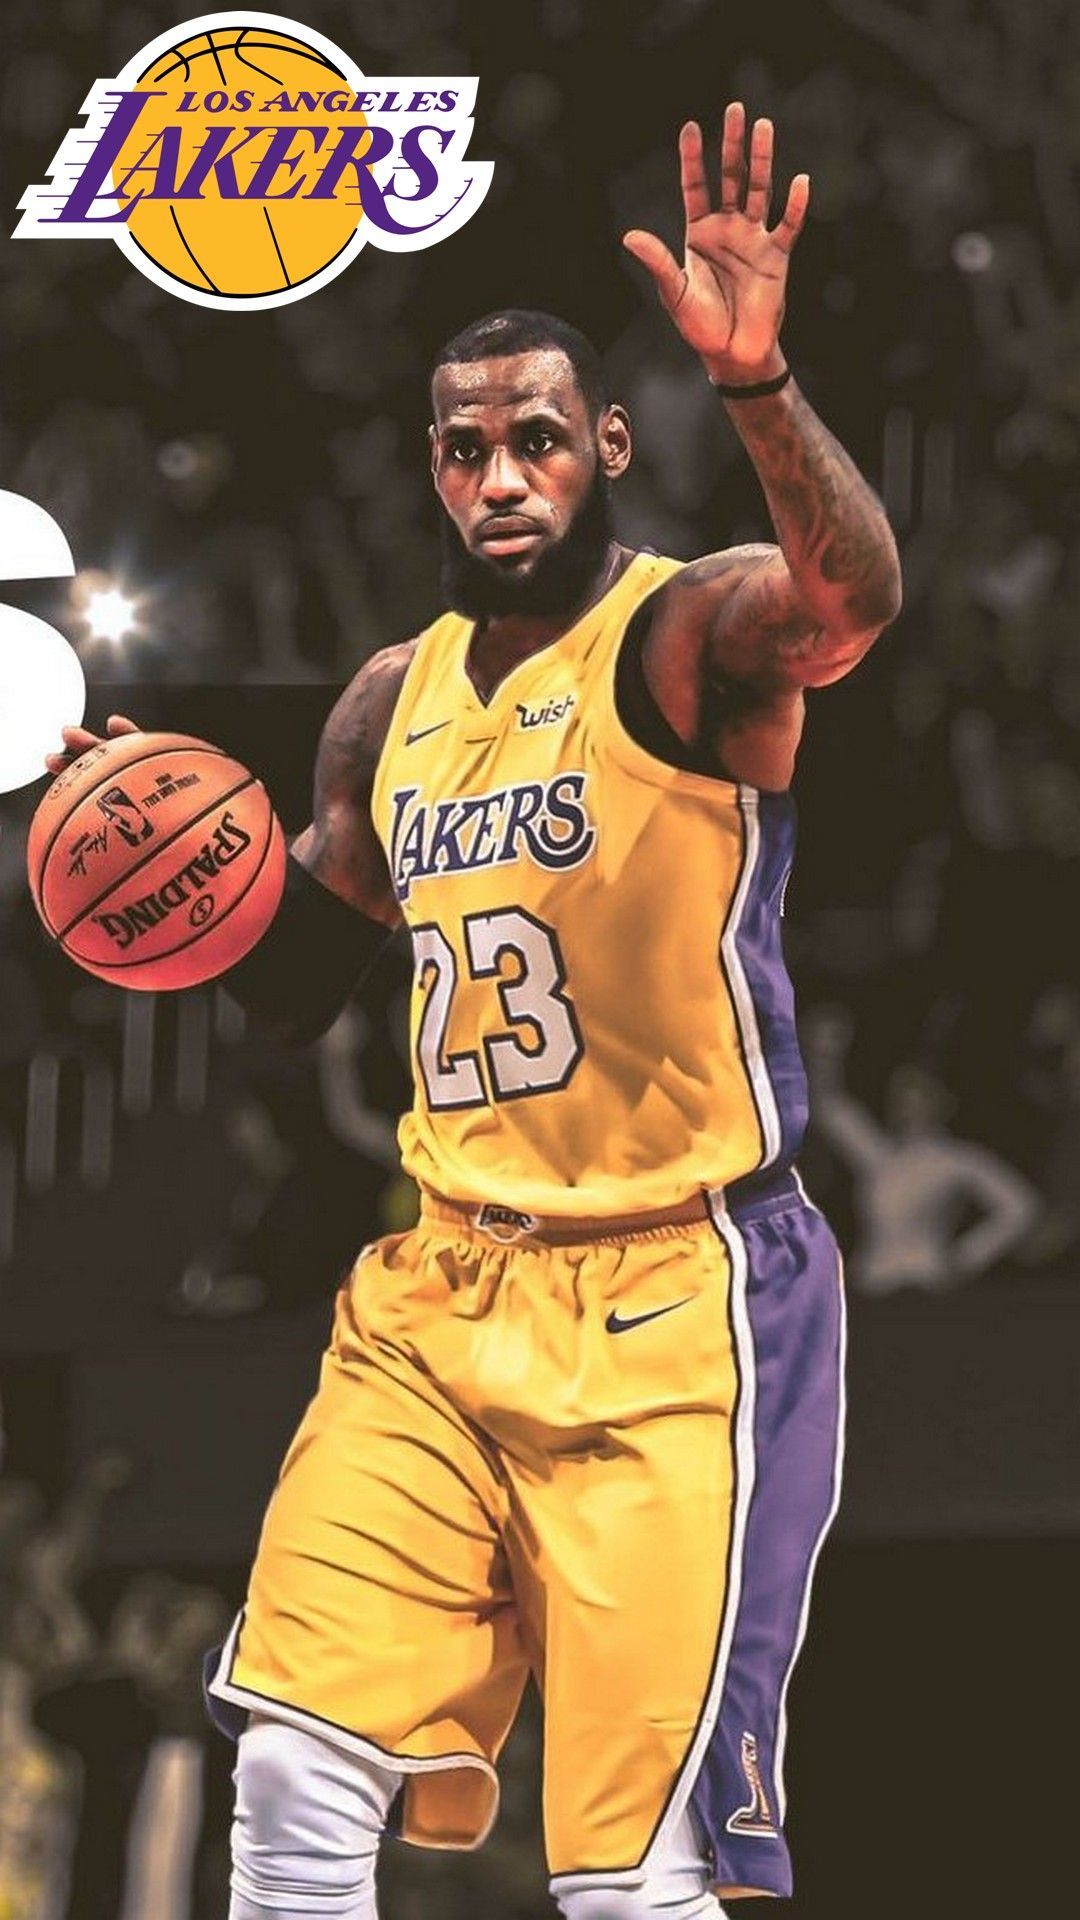 LA Lakers LeBron James HD Wallpaper For iPhone Basketball Wallpaper. Lebron james wallpaper, Nba lebron james, Lebron james